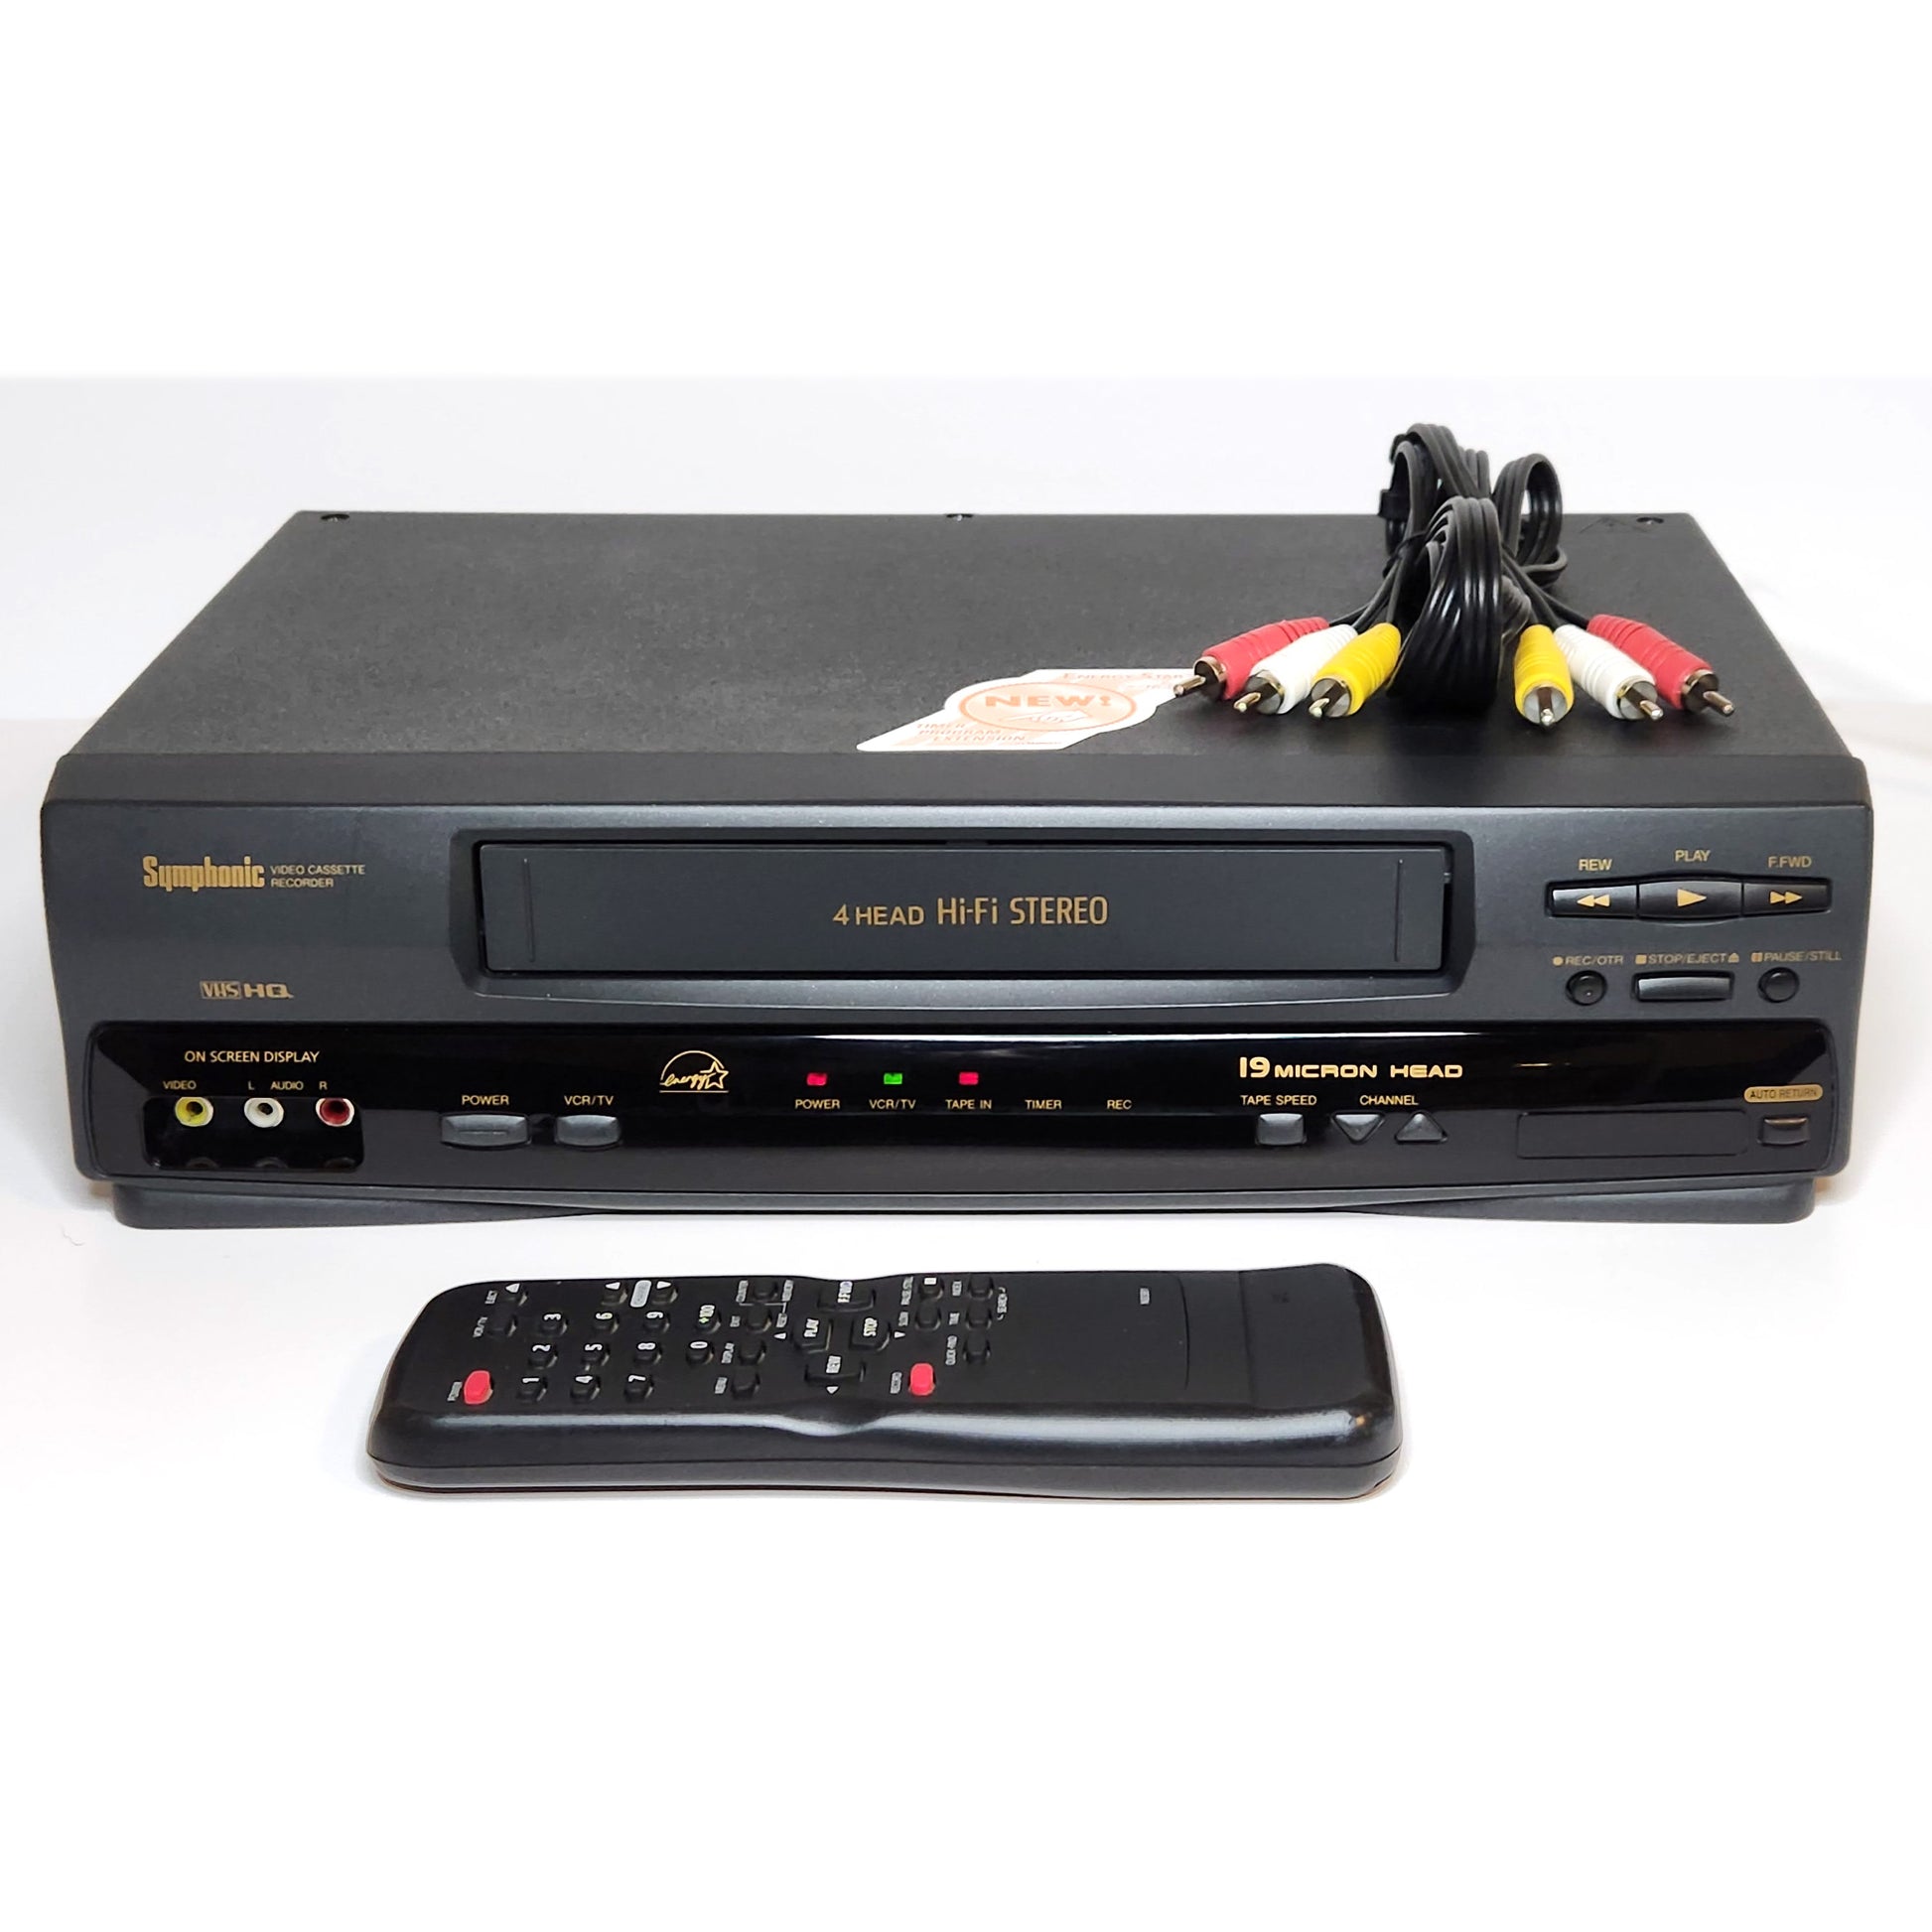 Symphonic VR-69WF VCR, 4-Head Hi-Fi Stereo